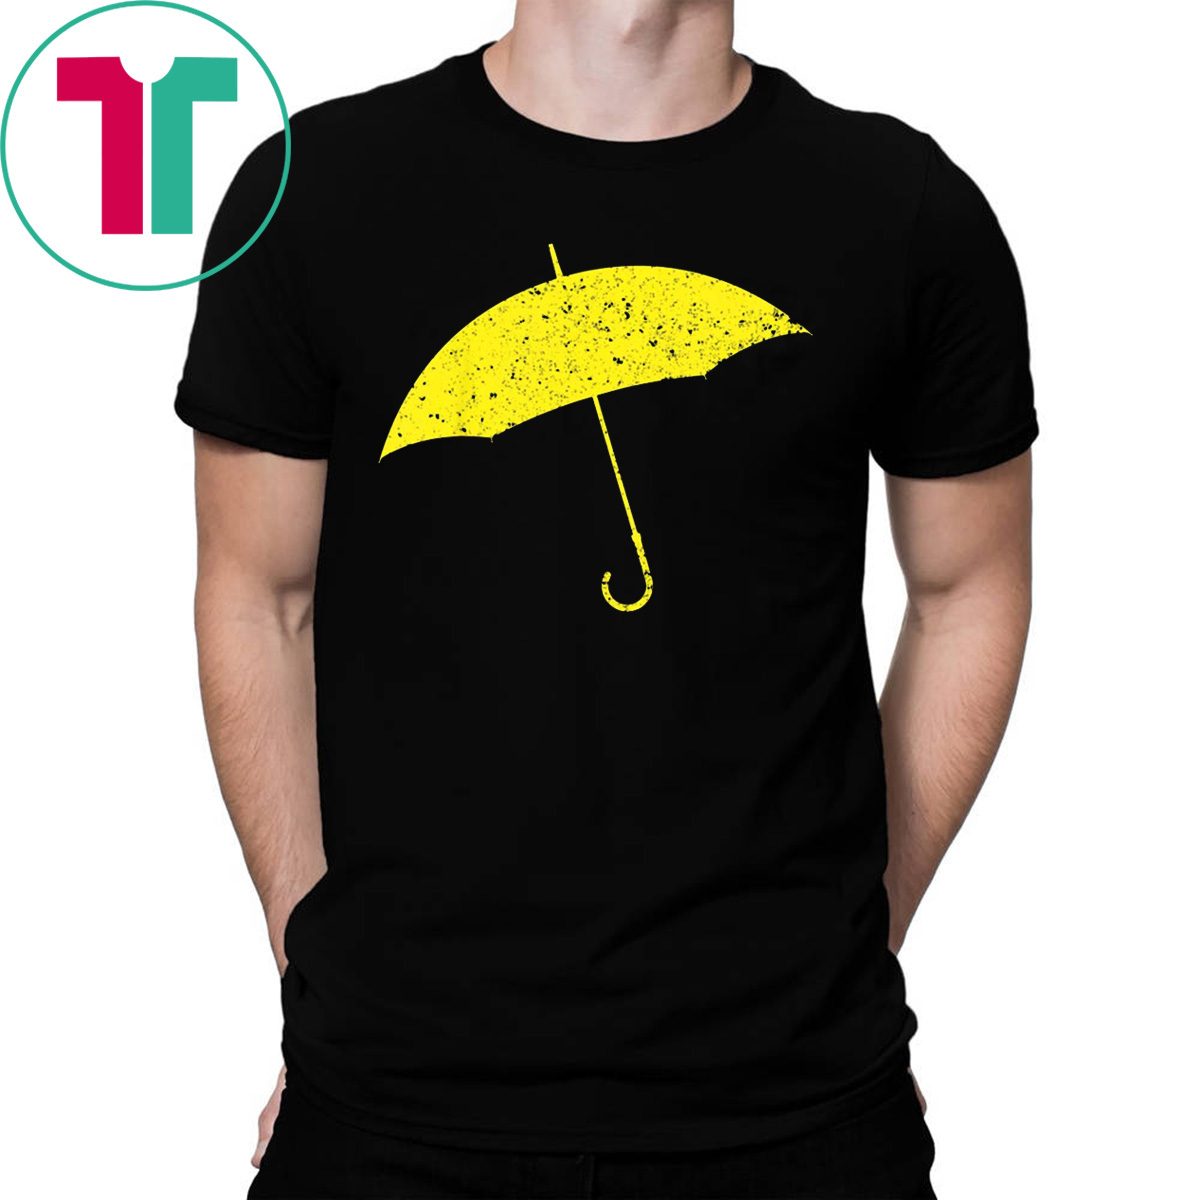 Vintage Yellow Umbrella Hong Kong Movement 2019 T-Shirt - OrderQuilt.com